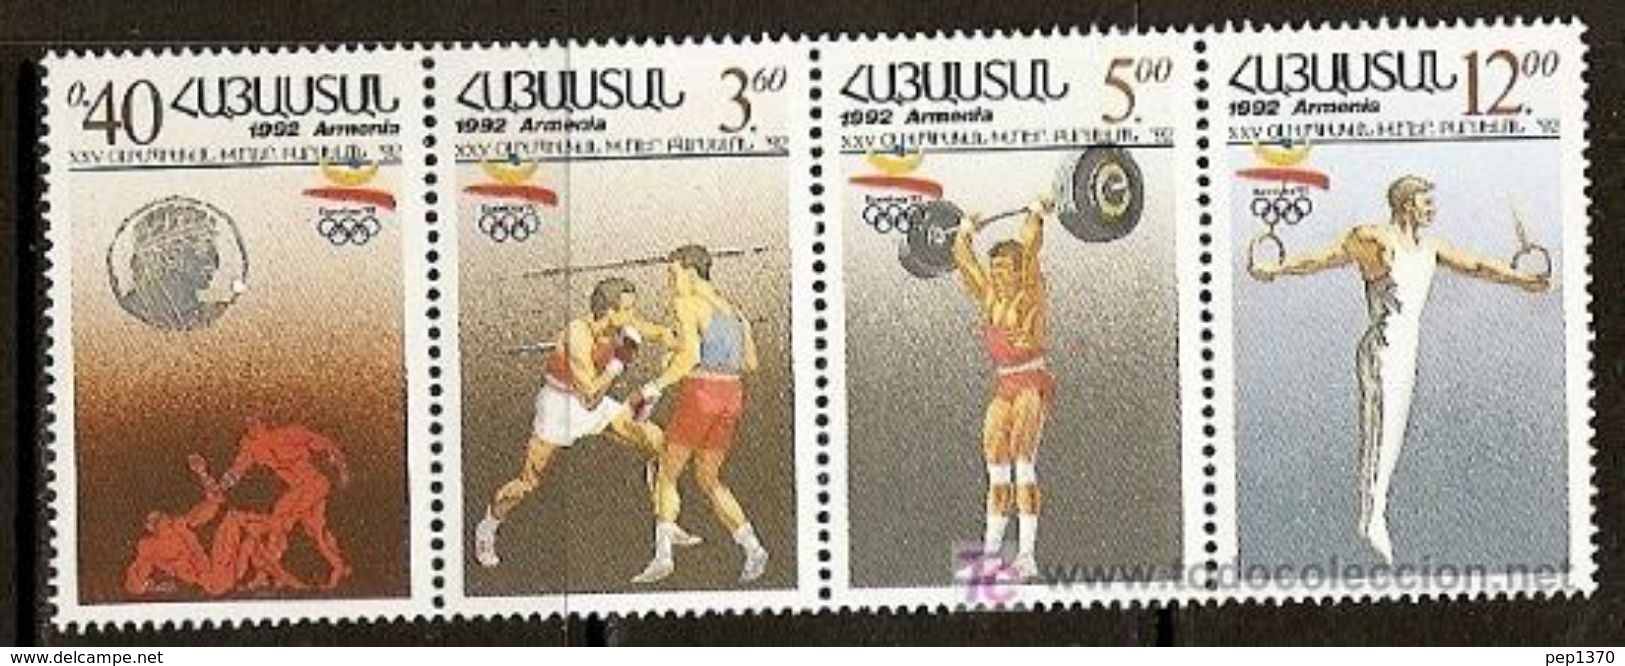 ARMENIA 1992 - OLYMPICS BARCELONA 92 - YVERT Nº 179-182**  MICHEL 199-202  SCOTT 432a-432d - Weightlifting